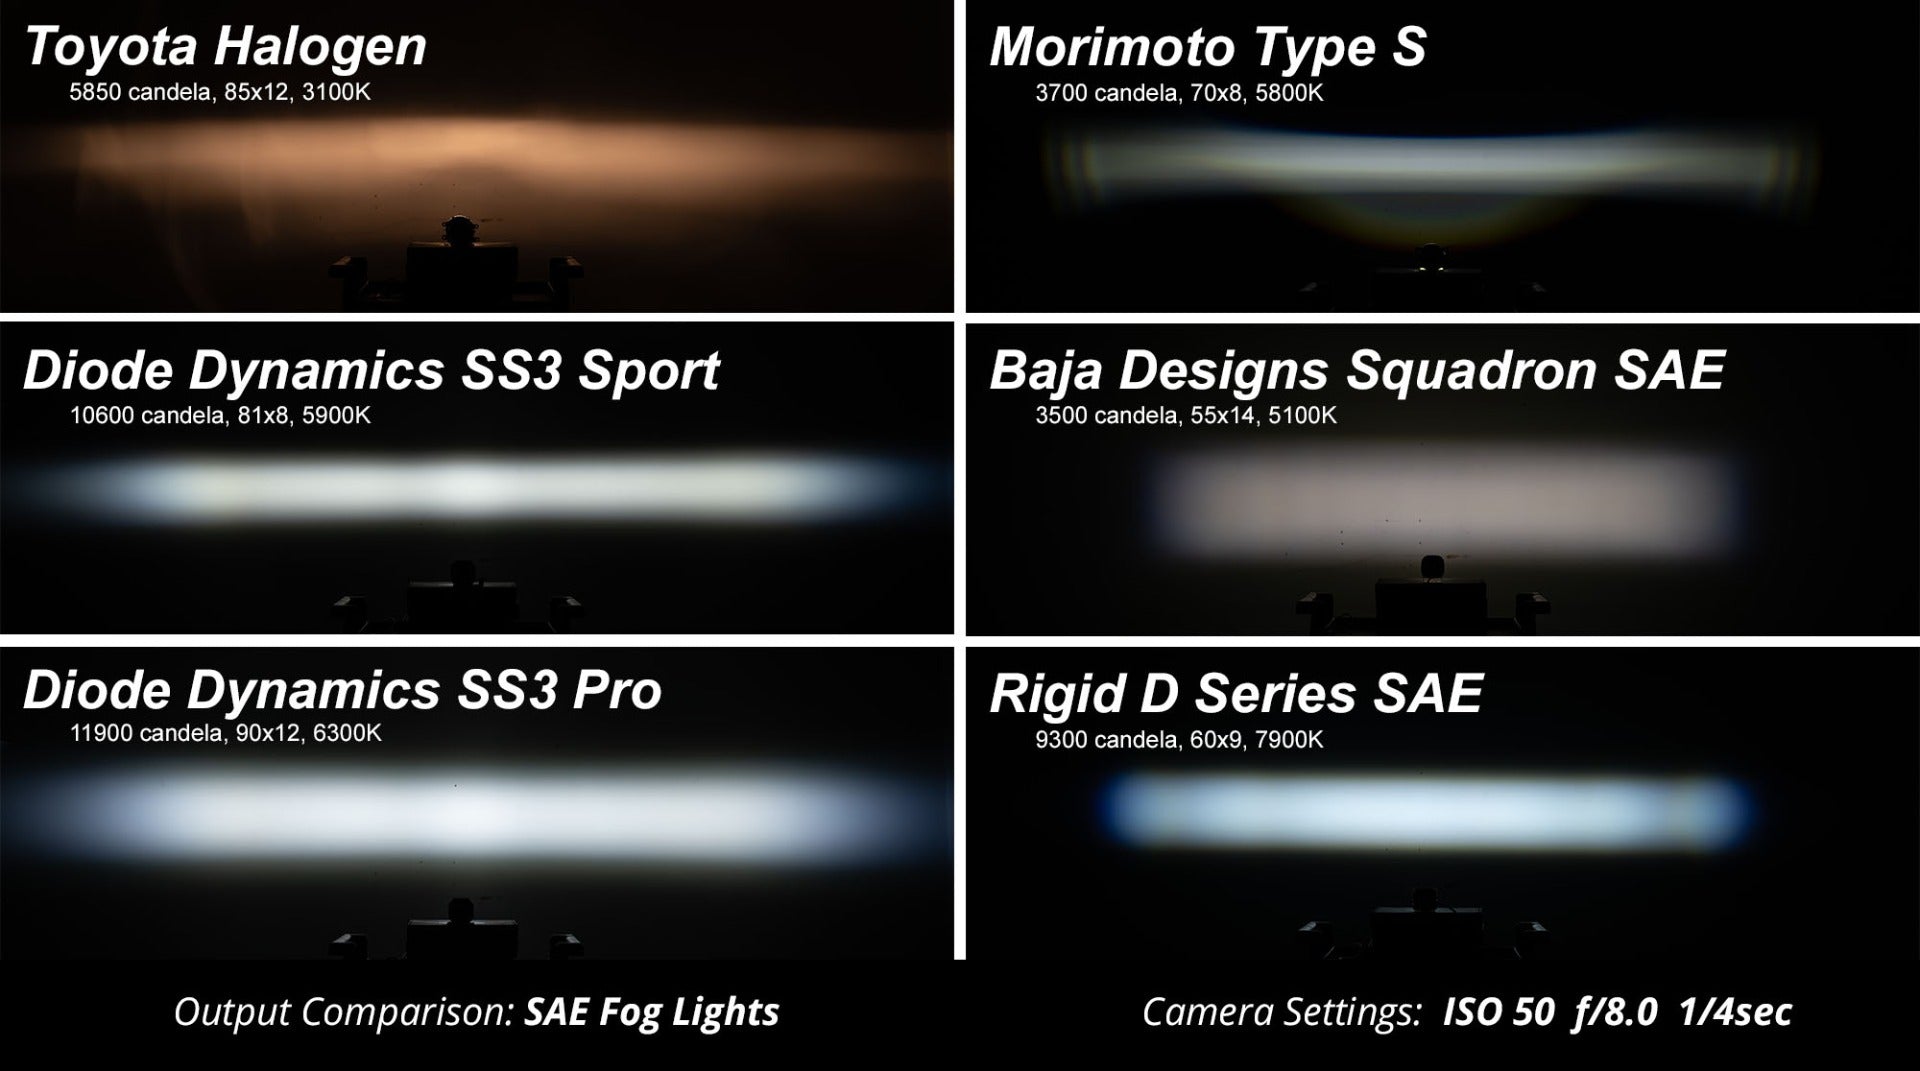 SS3 LED Fog Light Kit for 2009-2014 Toyota Venza Yellow SAE Fog Pro Diode Dynamics